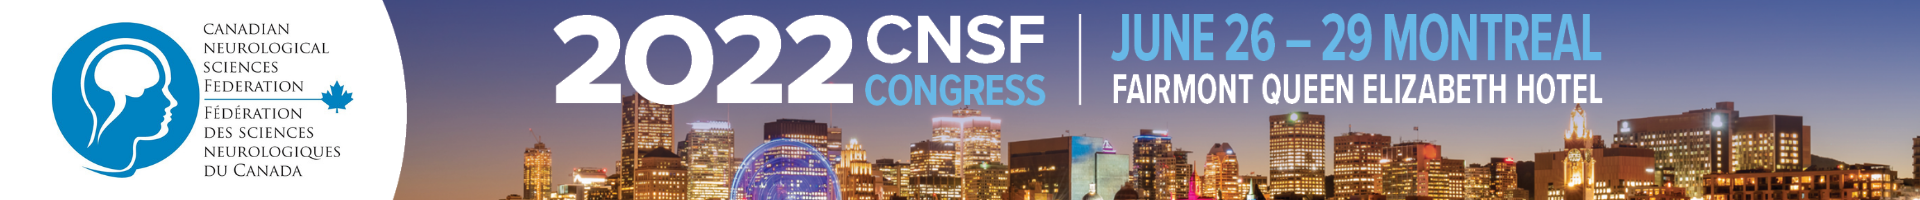 2022 CNSF Congress